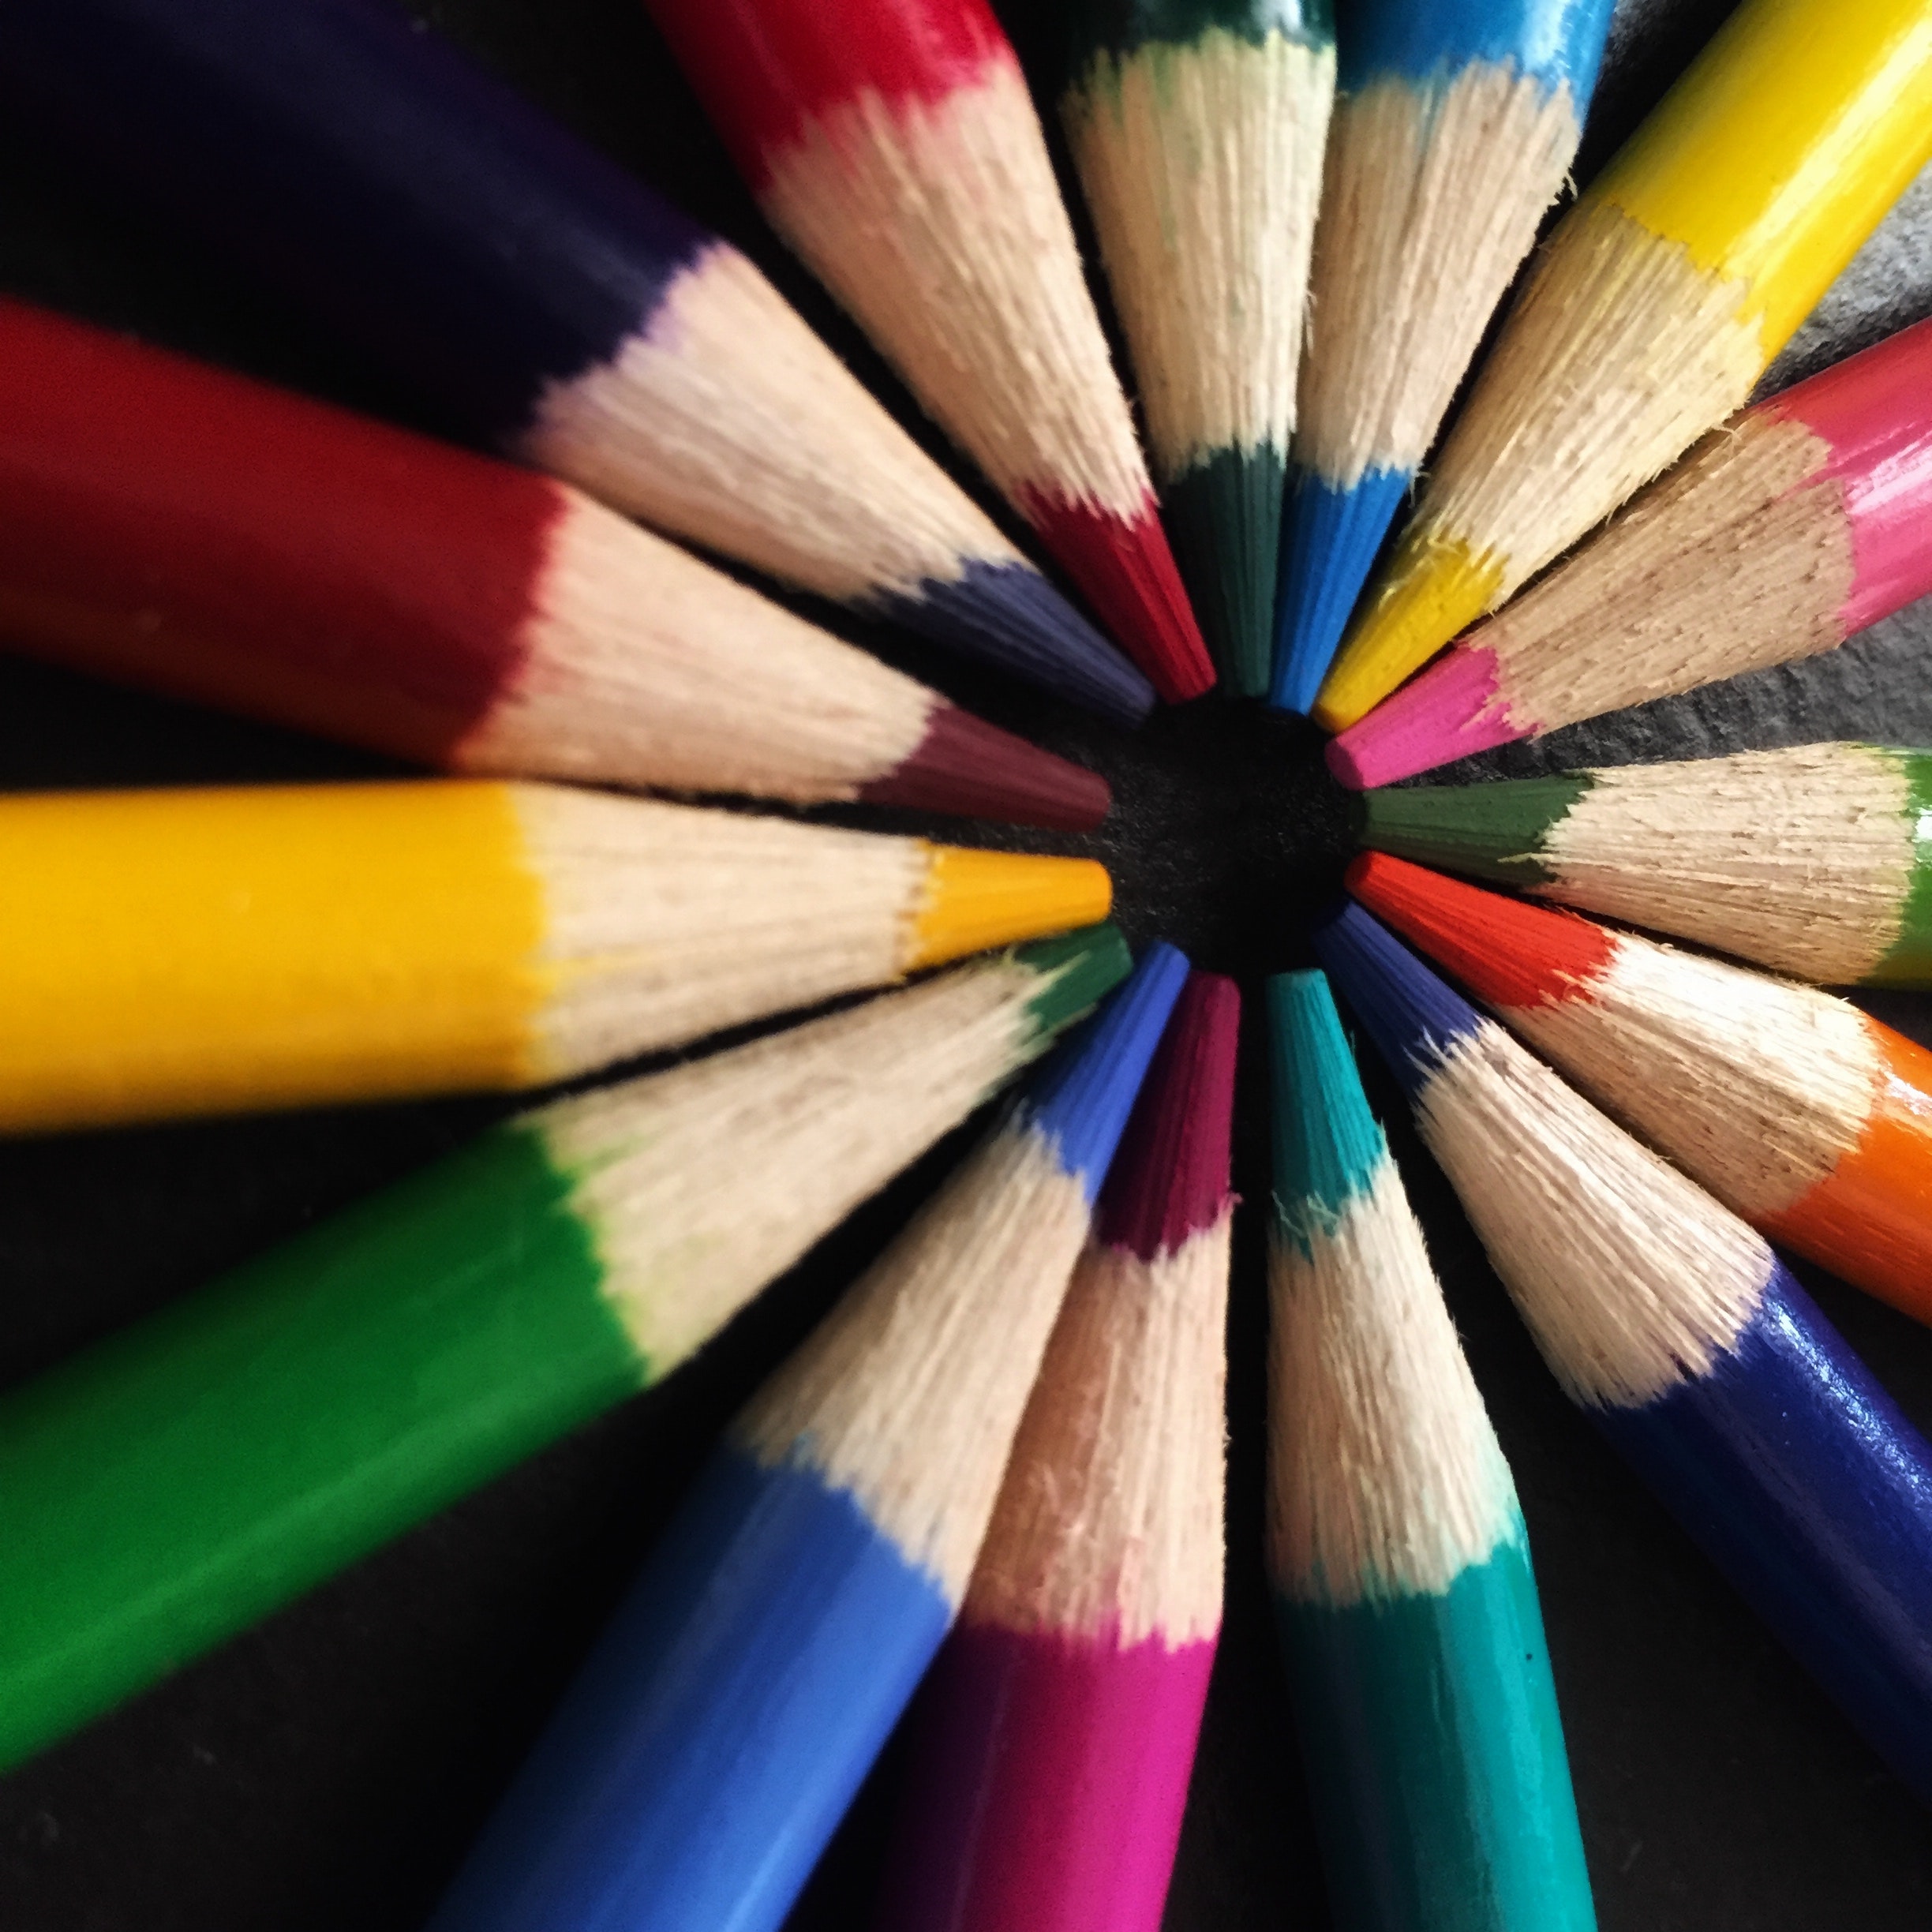 A spiral of multi-colored pencils